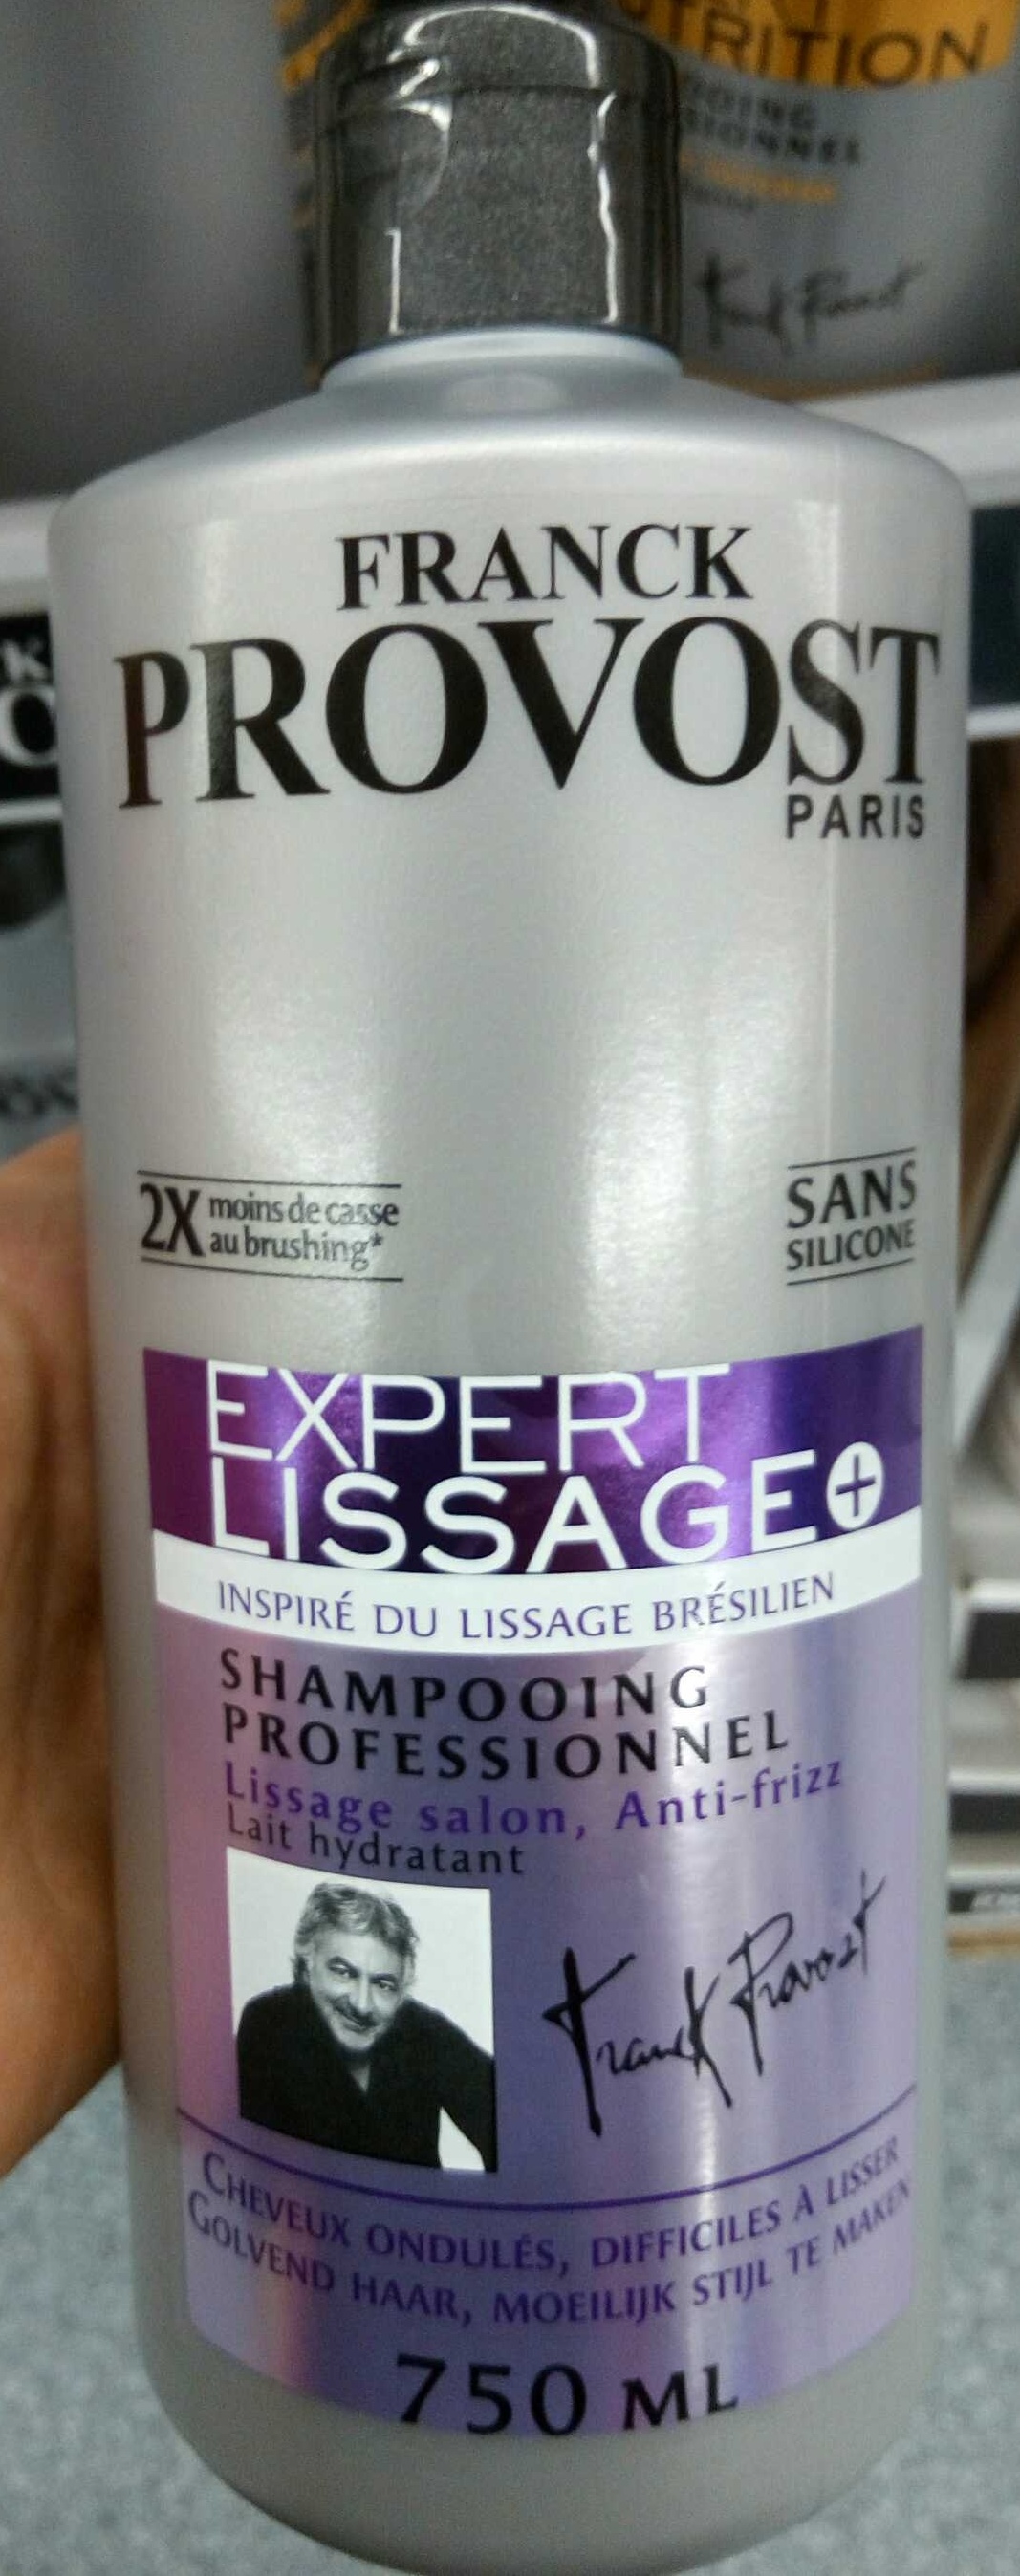 Expert lissage+ shampooing professionnel - Produit - fr